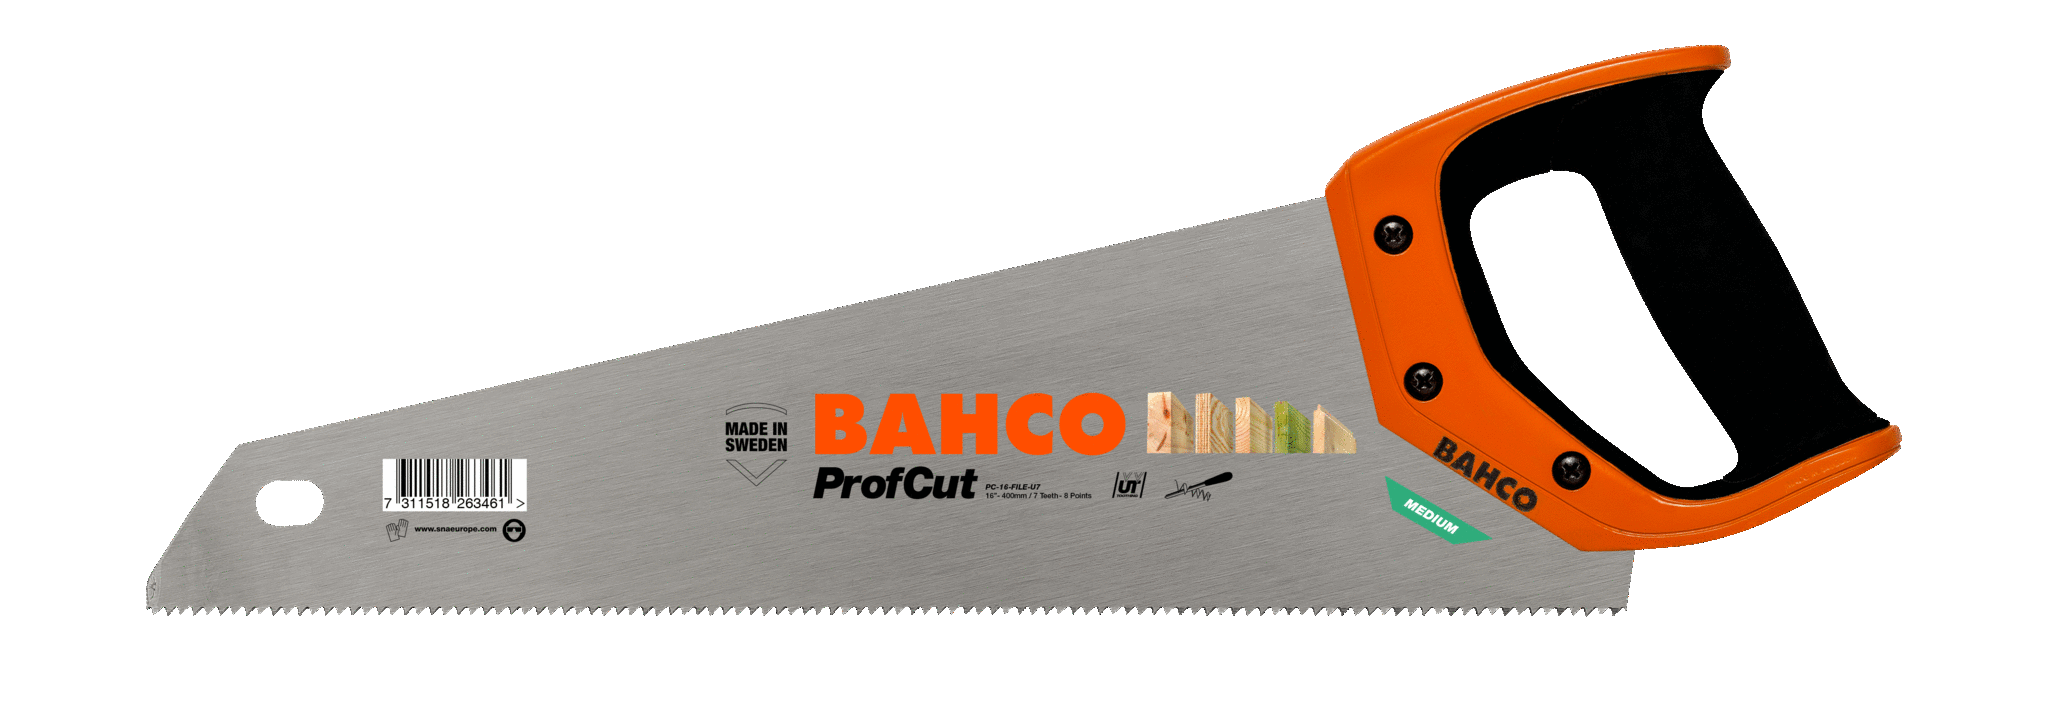 SERRUCHO BAHCO AFILABLE 600 MM  PC-24-FILE-U7 BAHCO